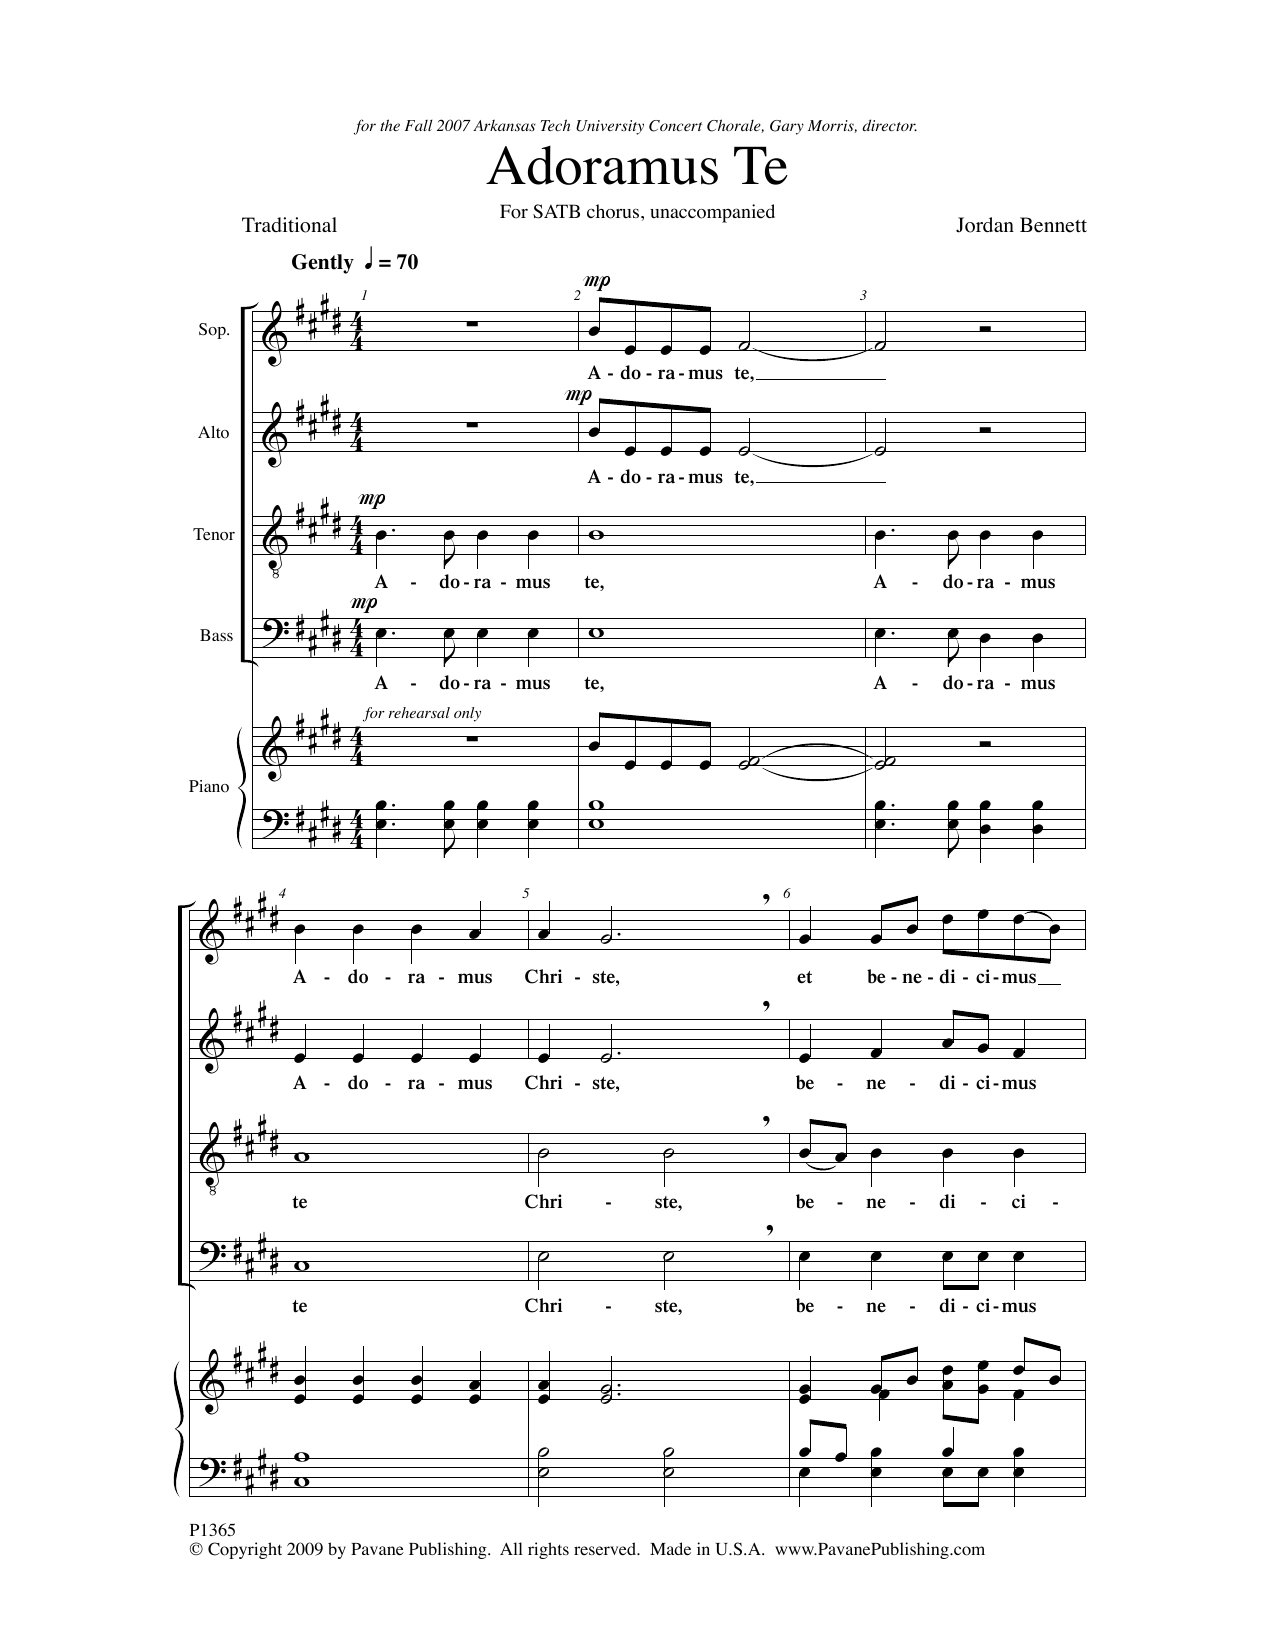 Download Jordan Bennett Adoramus Te Sheet Music and learn how to play SATB Choir PDF digital score in minutes